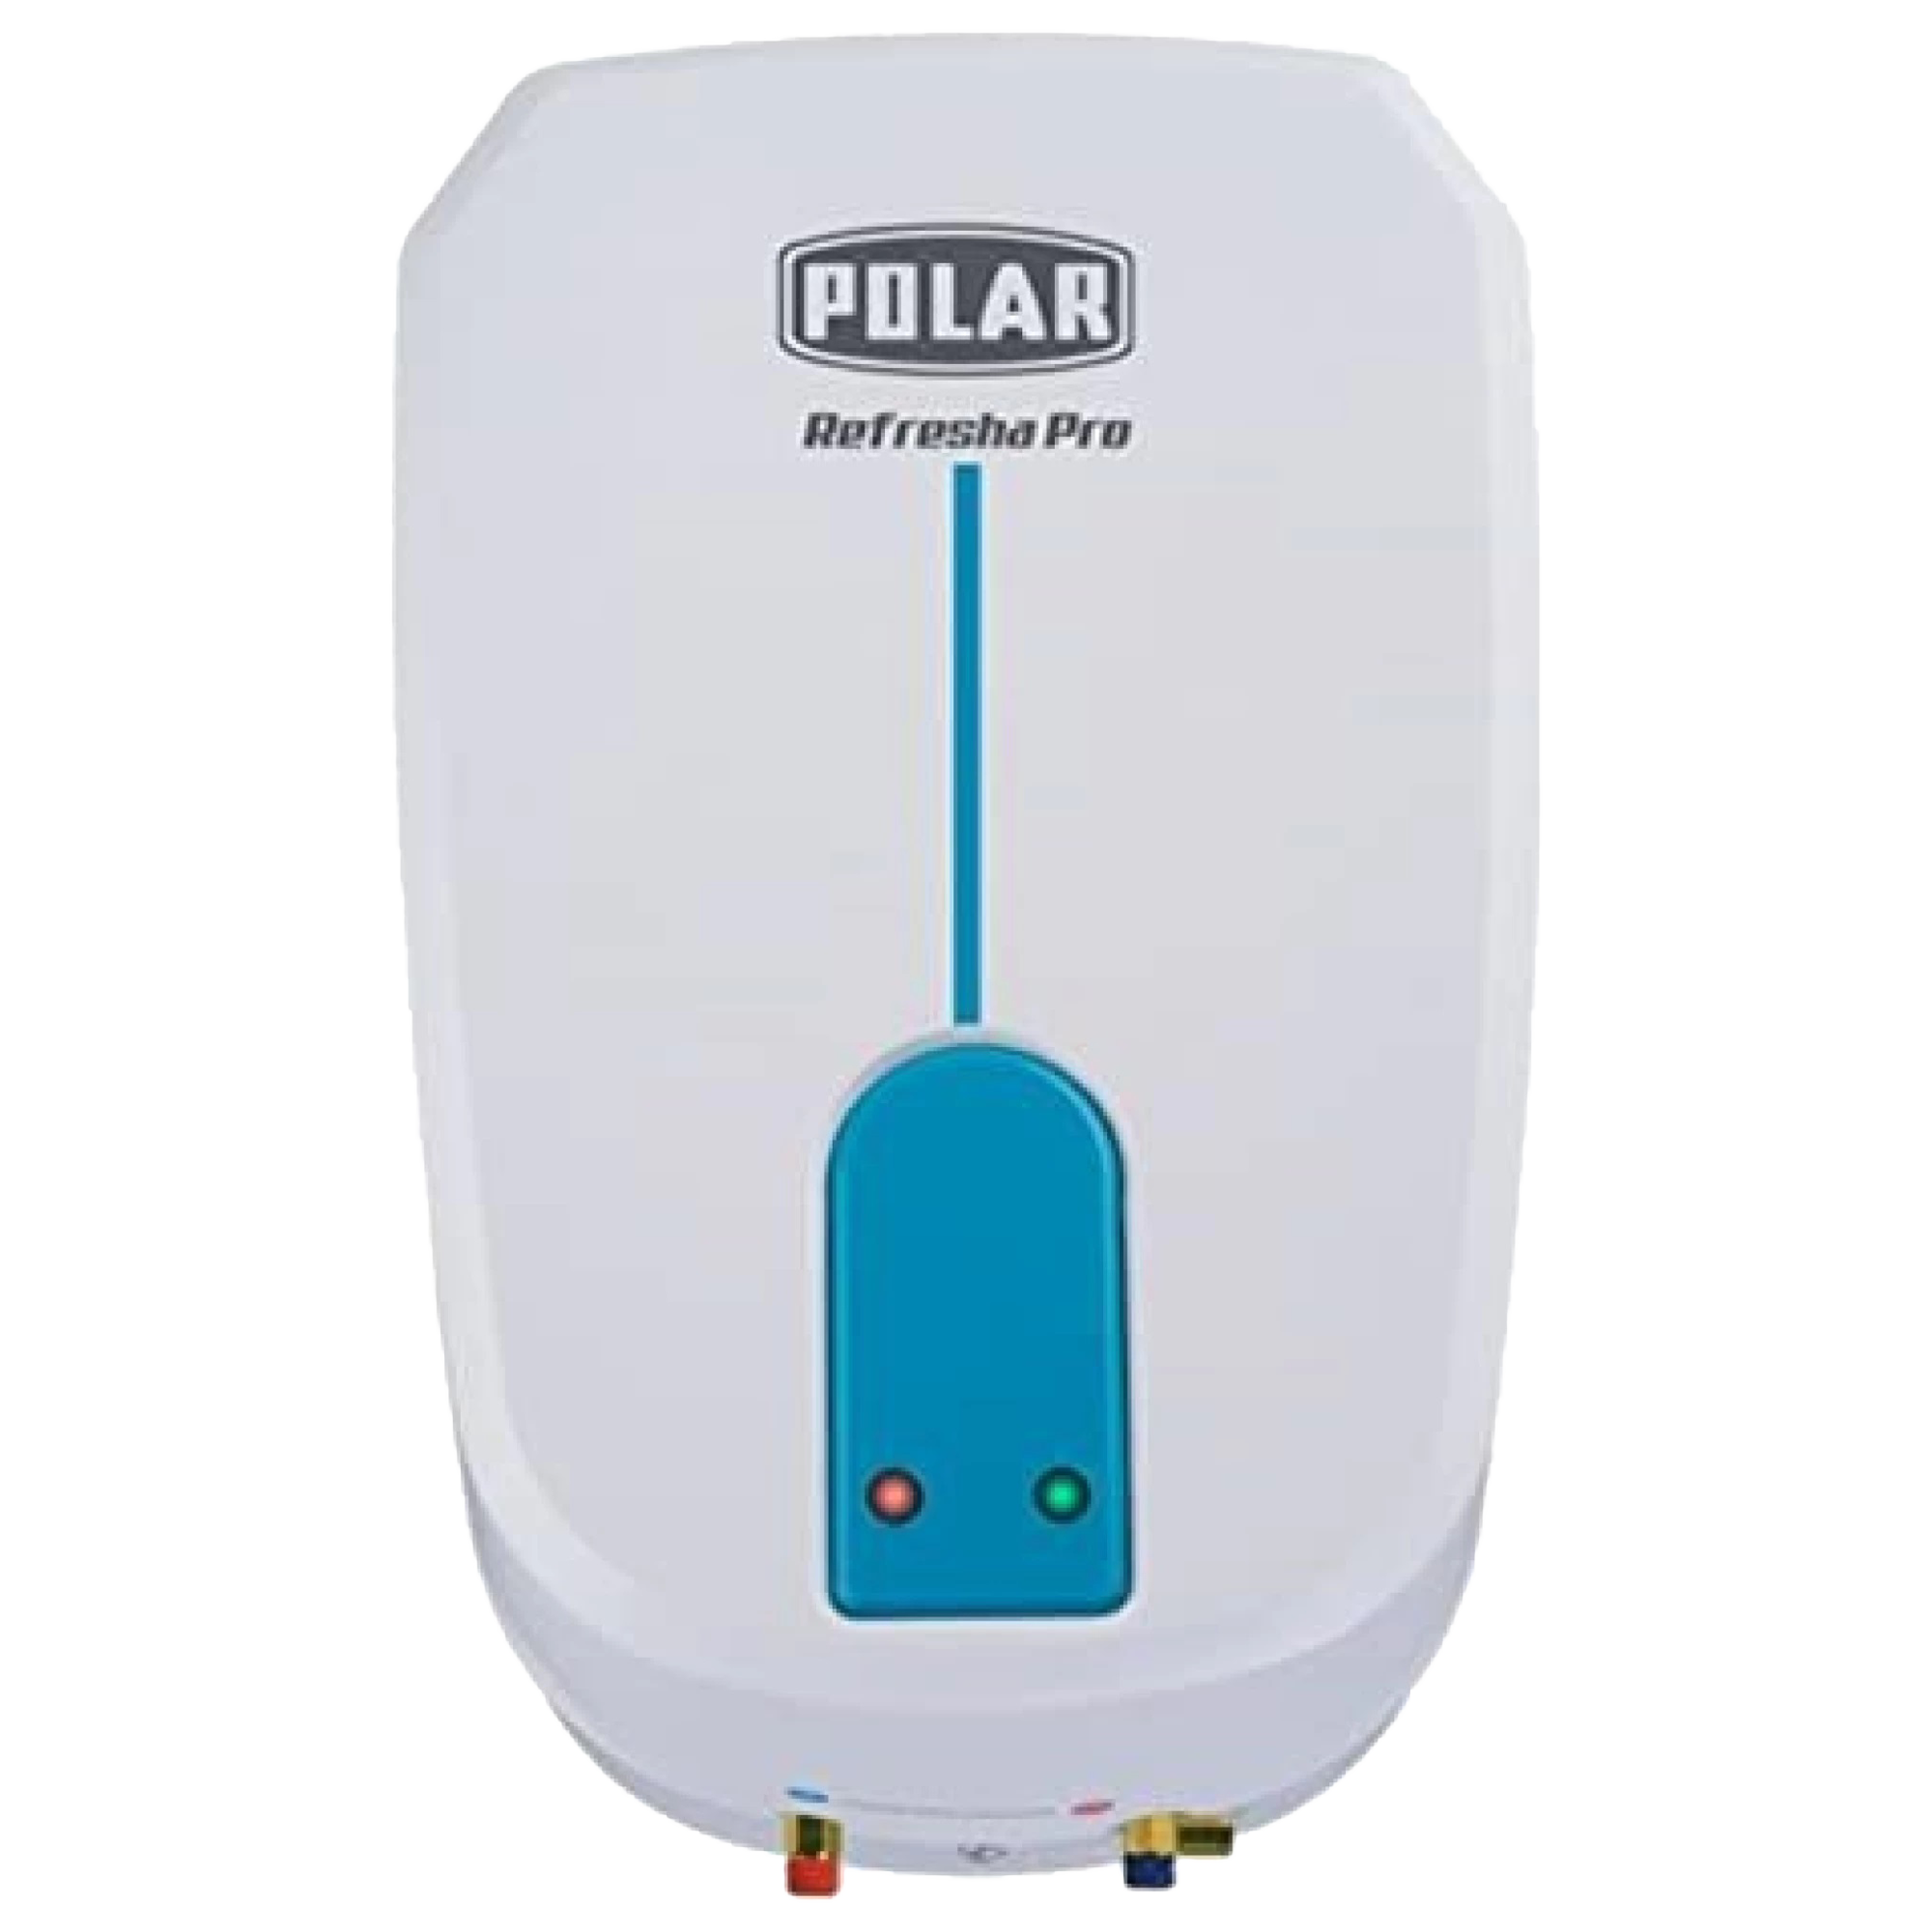 Polar Refresha Pro Instant Water Geyser (3000 Watts, WHREPROI3P1, White)